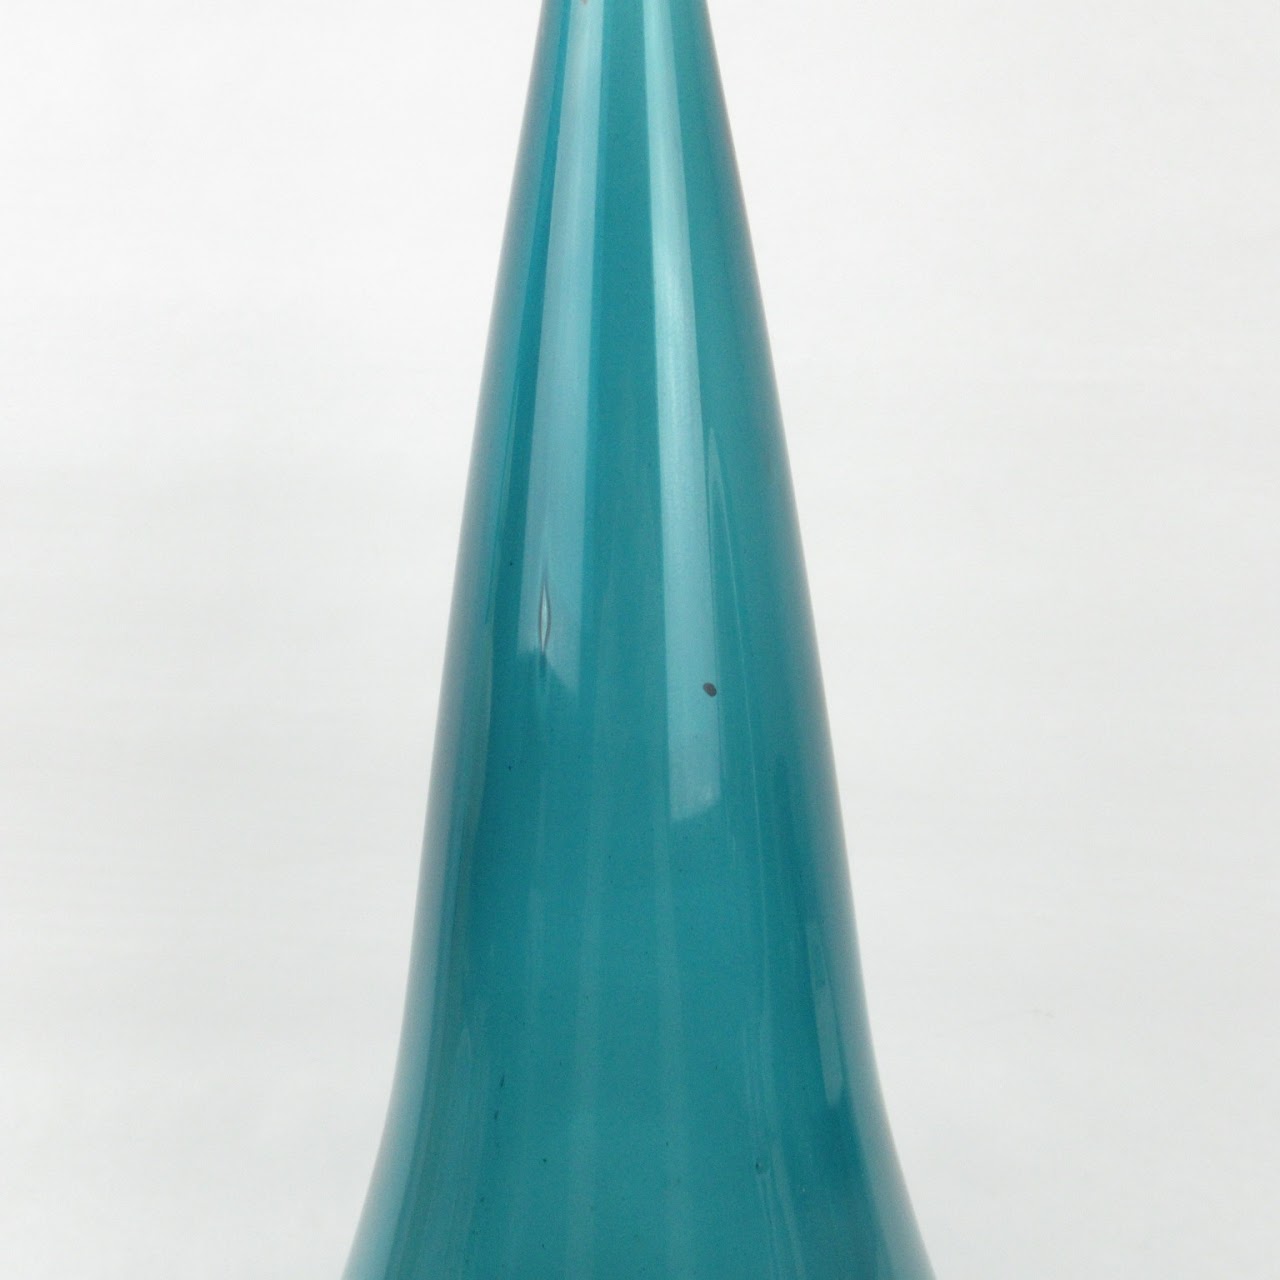 Tall Tapered Art Glass Vase